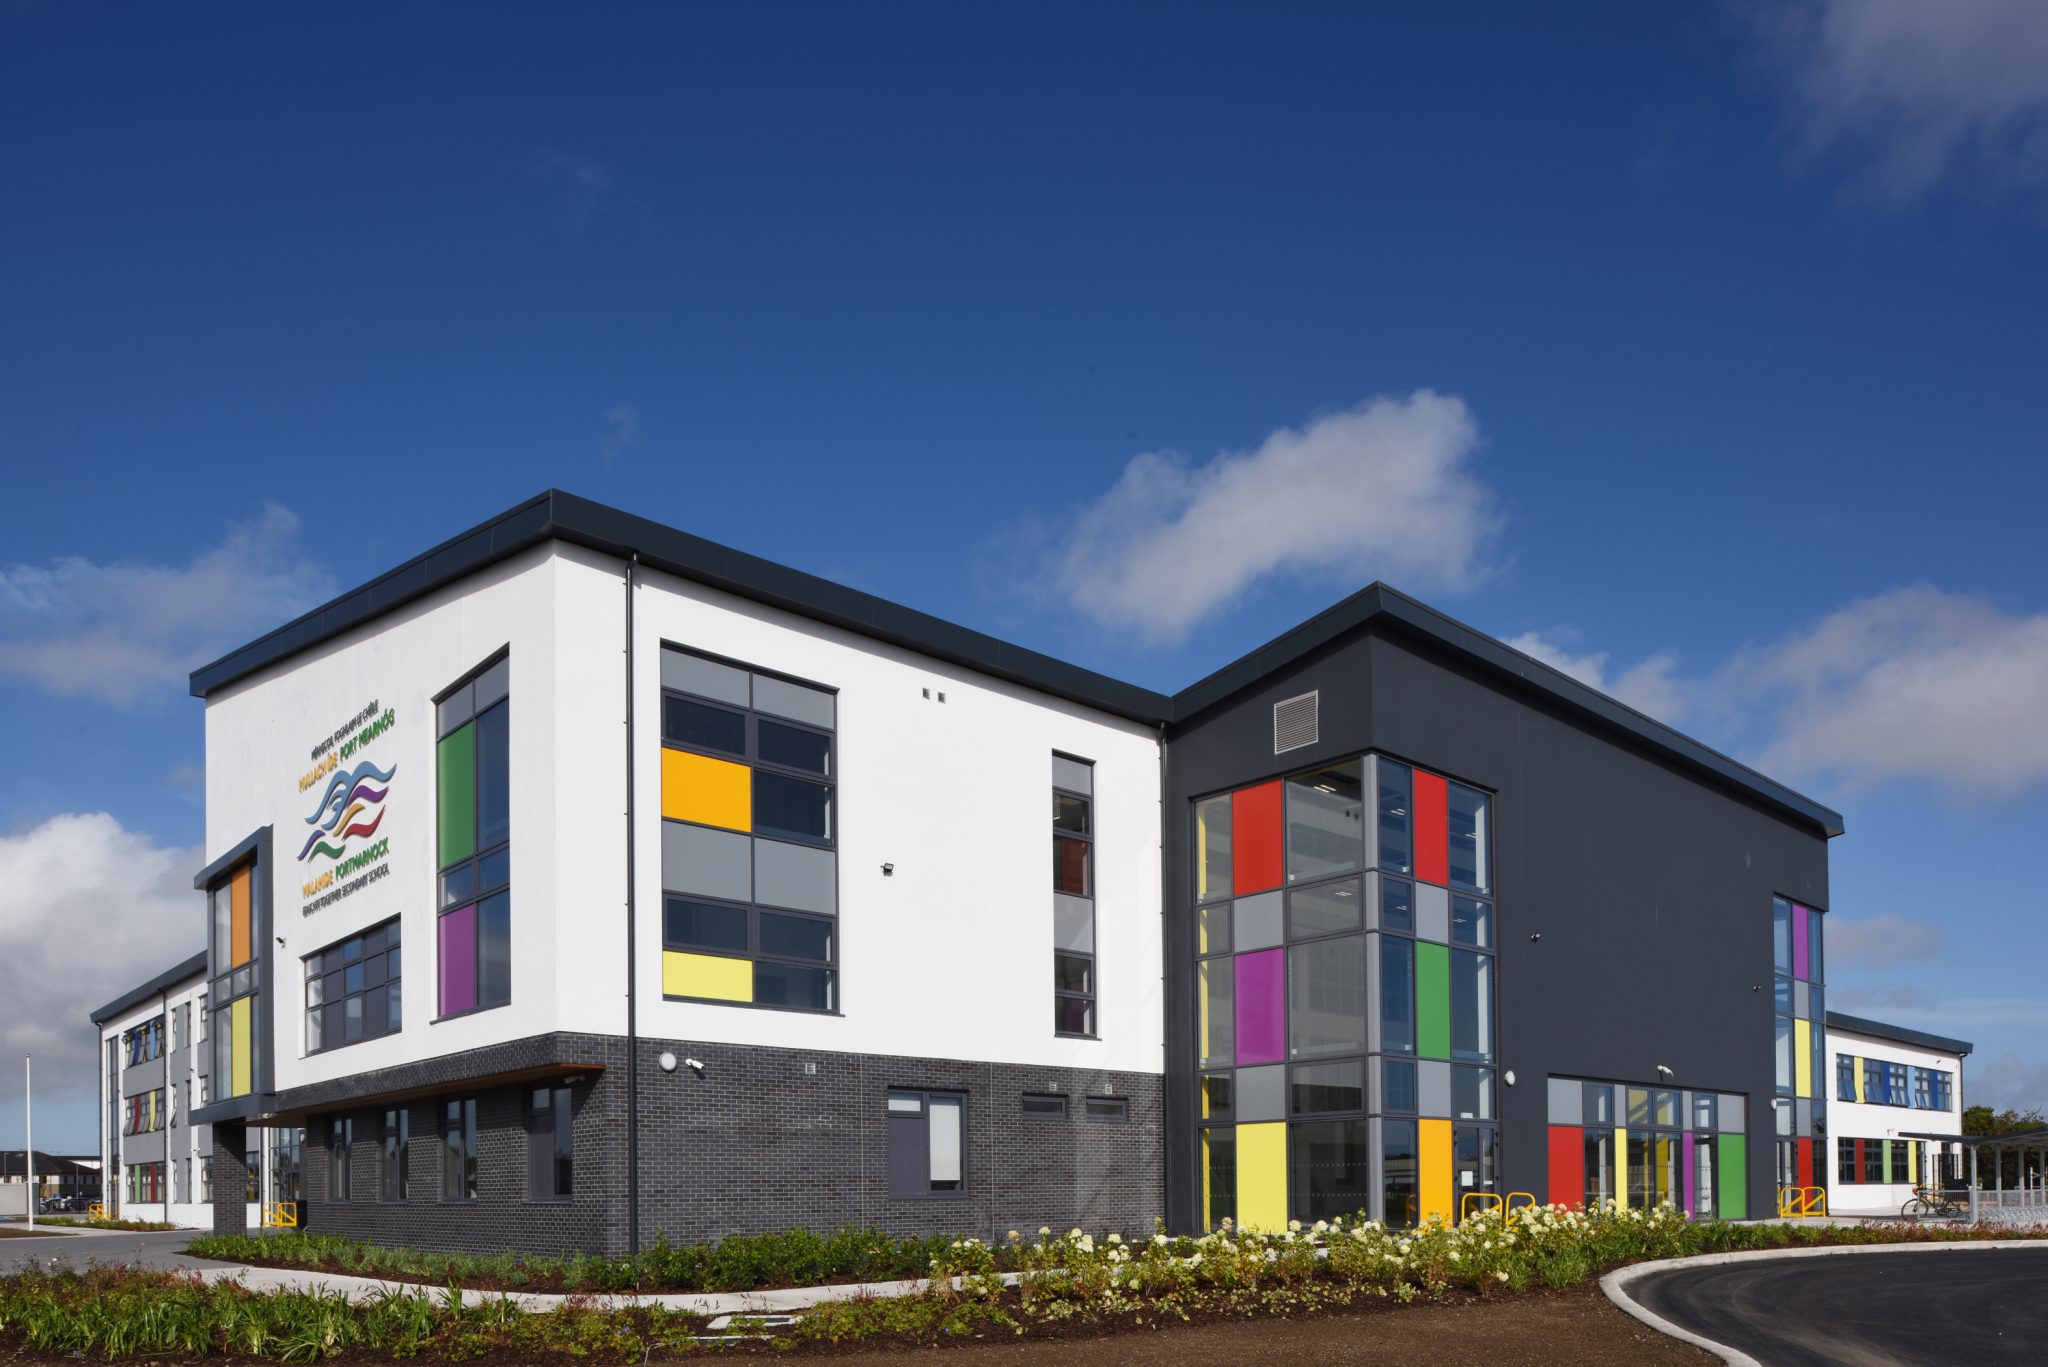 Successful completion & handover of Malahide Portmarnock Educate Together secondary school